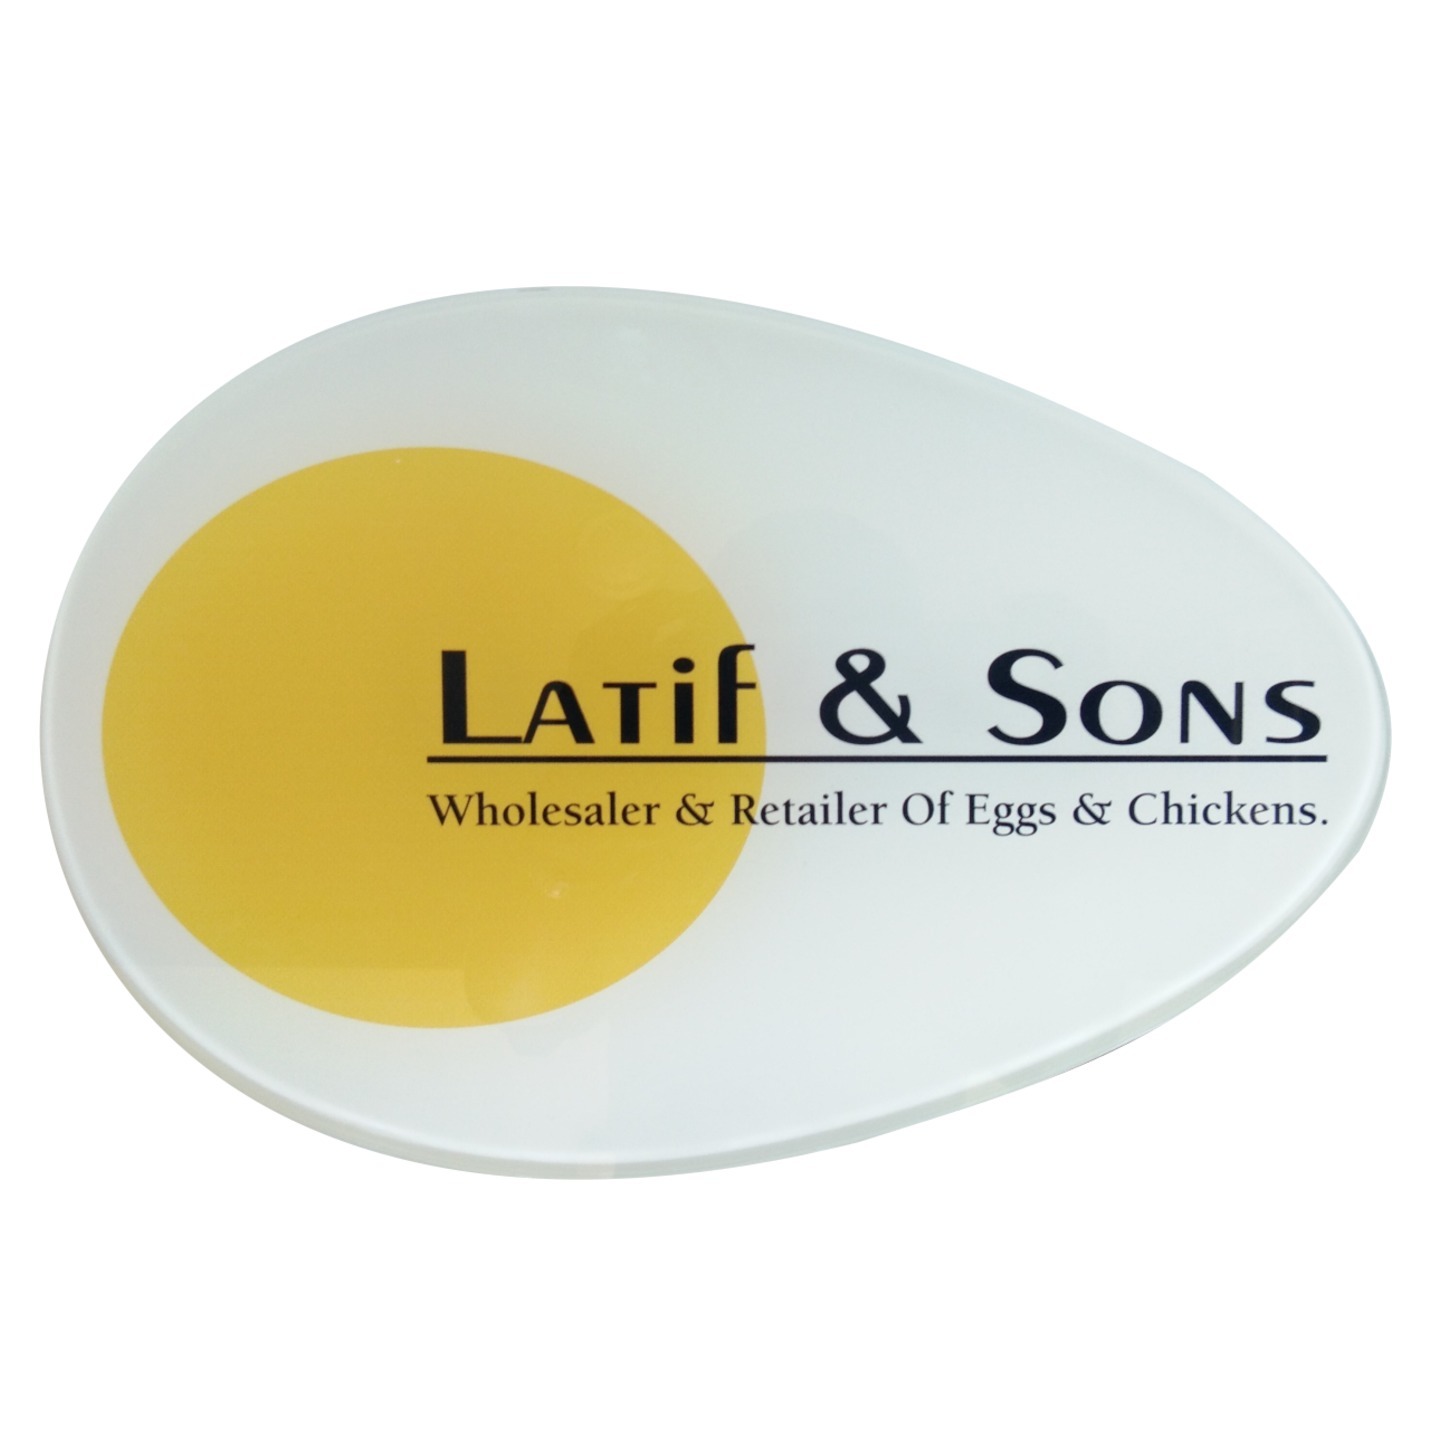 Latif & Sons